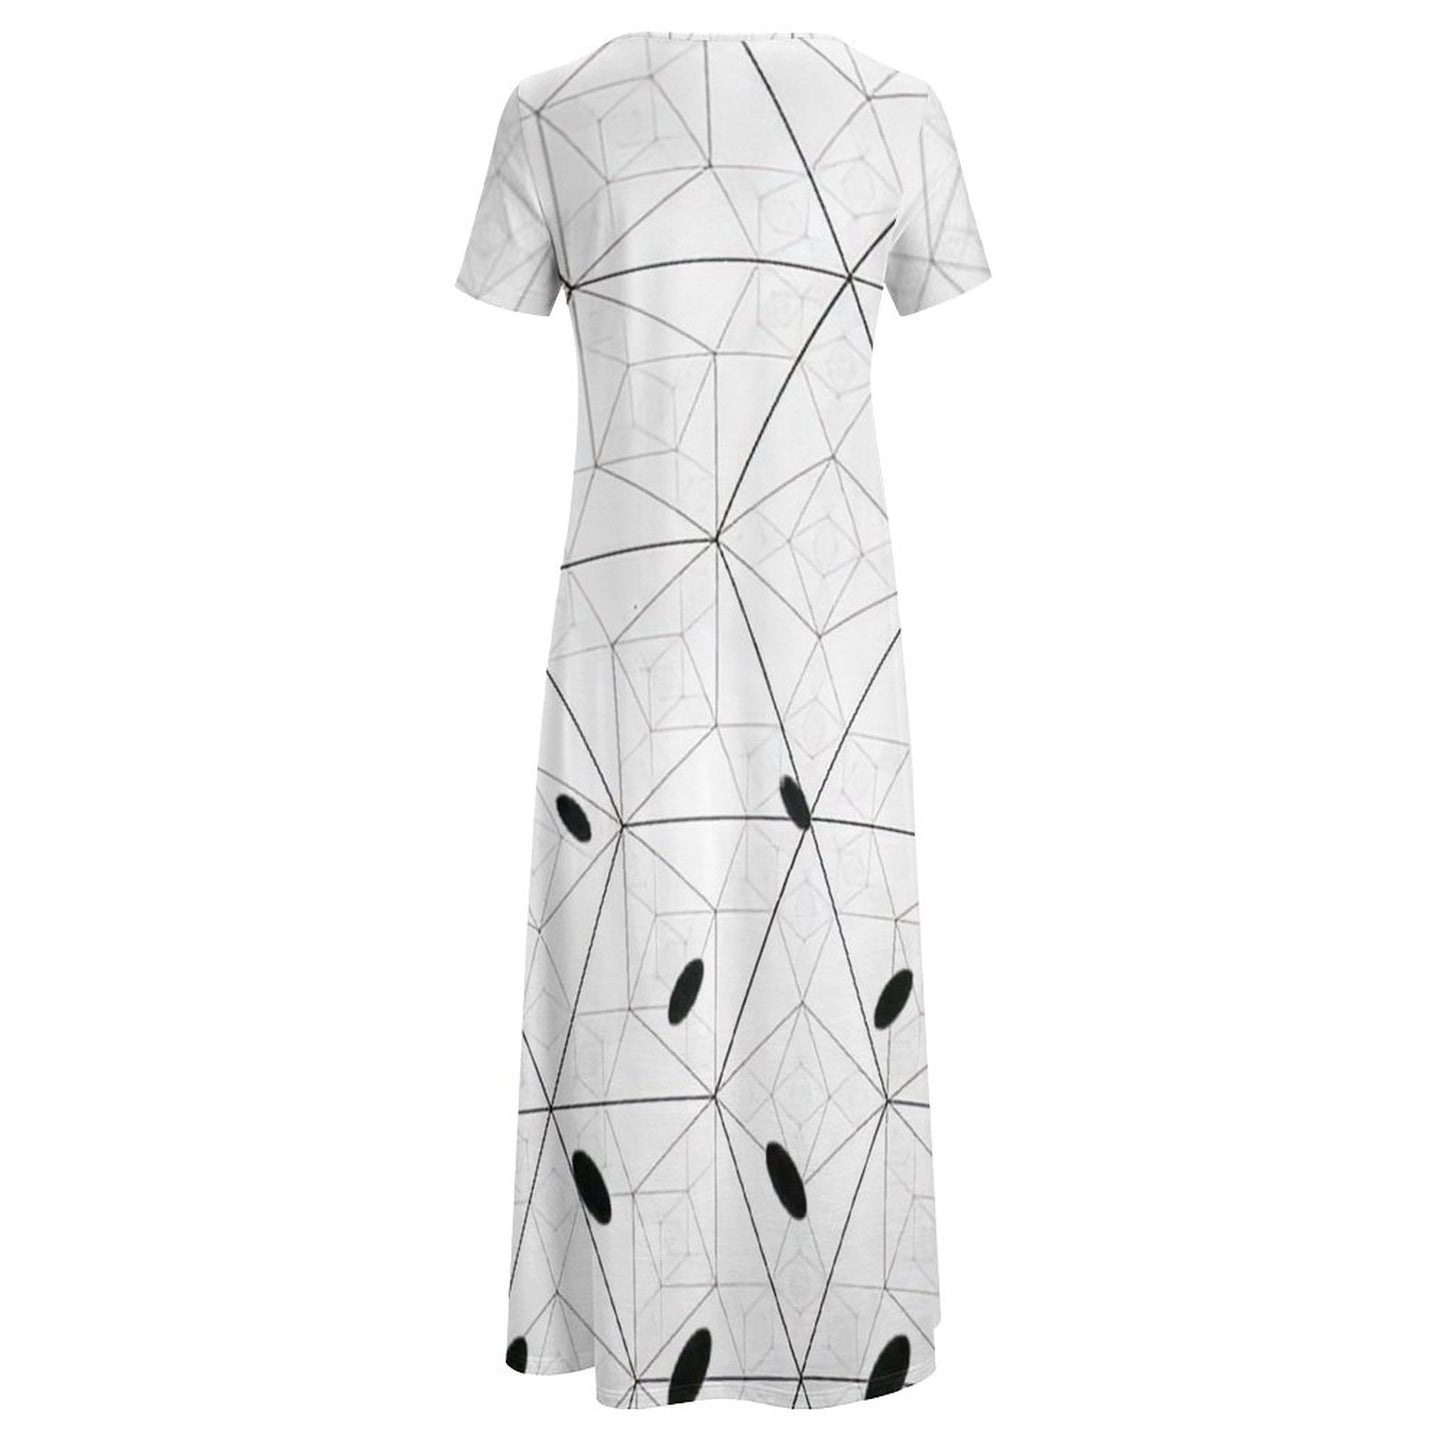 Online DIY Dress for Women Round Neck Short Sleeve Dress